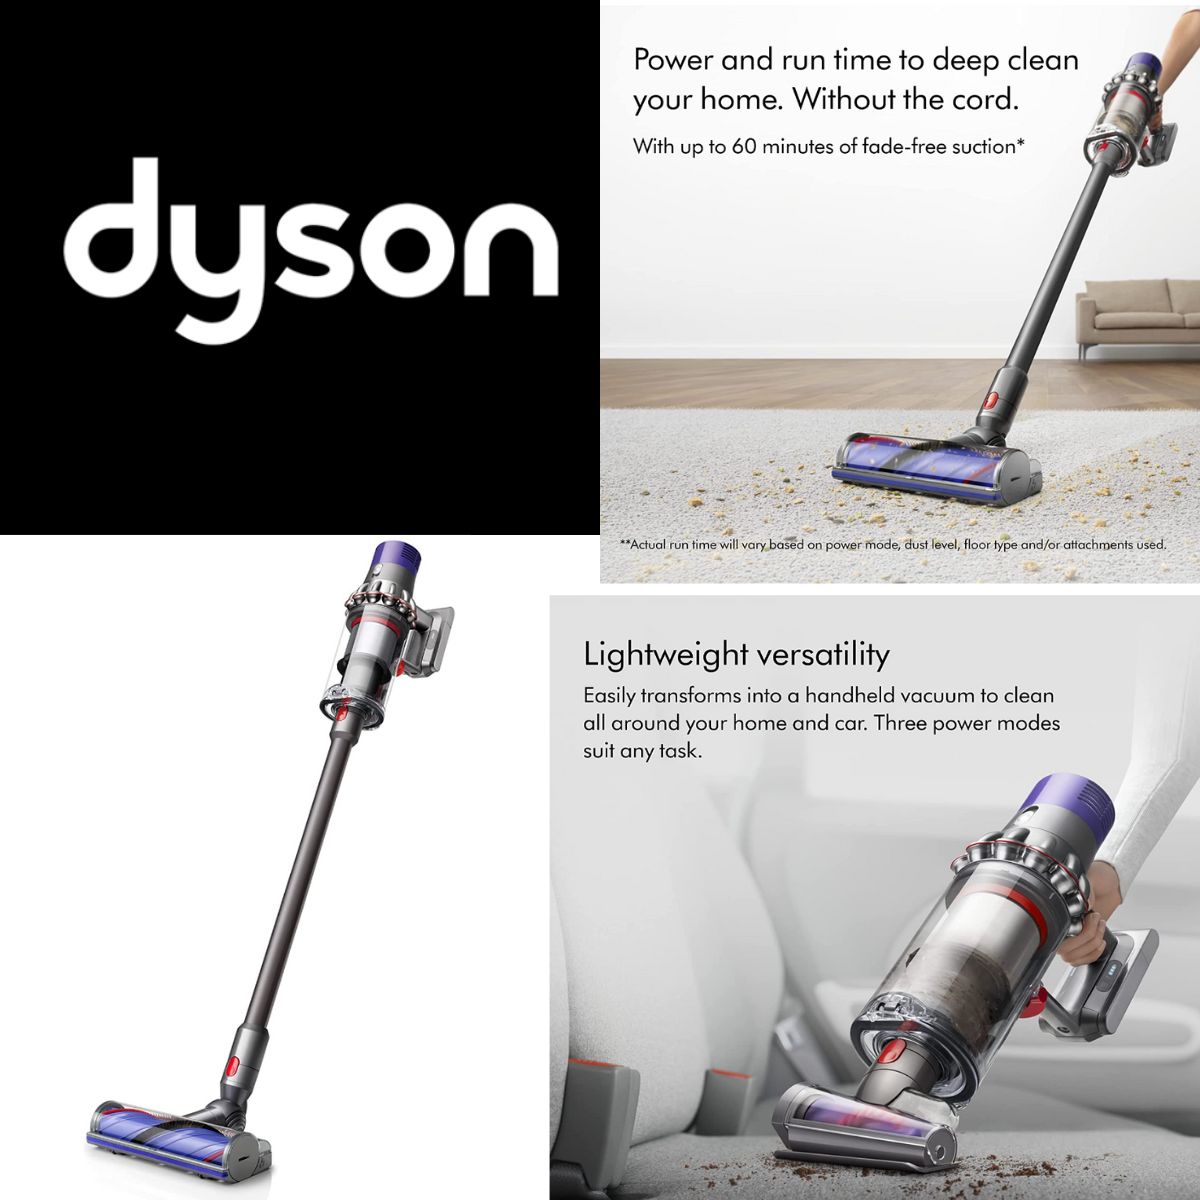 Dyson V10 Animal cordless vacuum cleaner $329.99 (Reg. $549.99) Savers